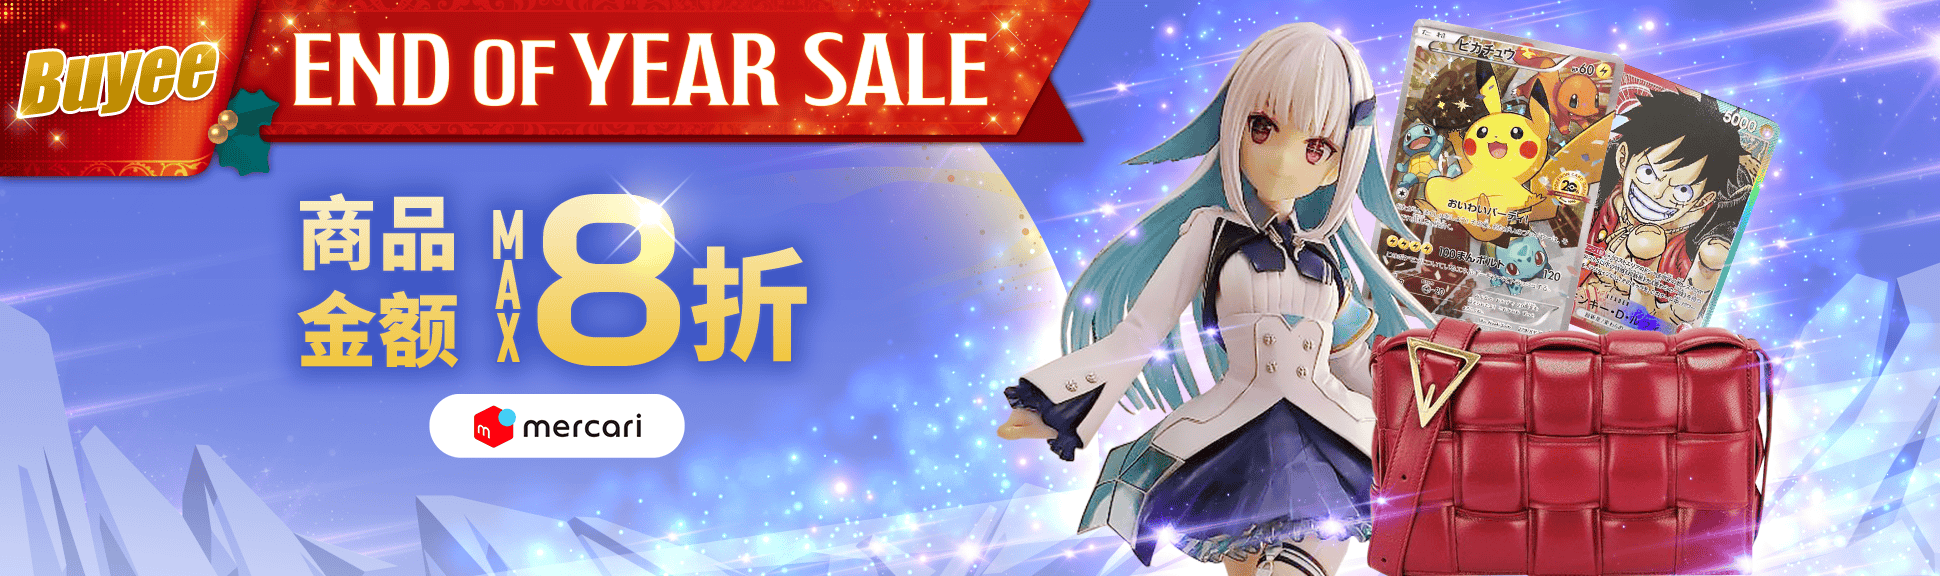 Buyee End of Year Sale! 商品金额MAX8折  期间限定超值优惠券惊喜发放中！